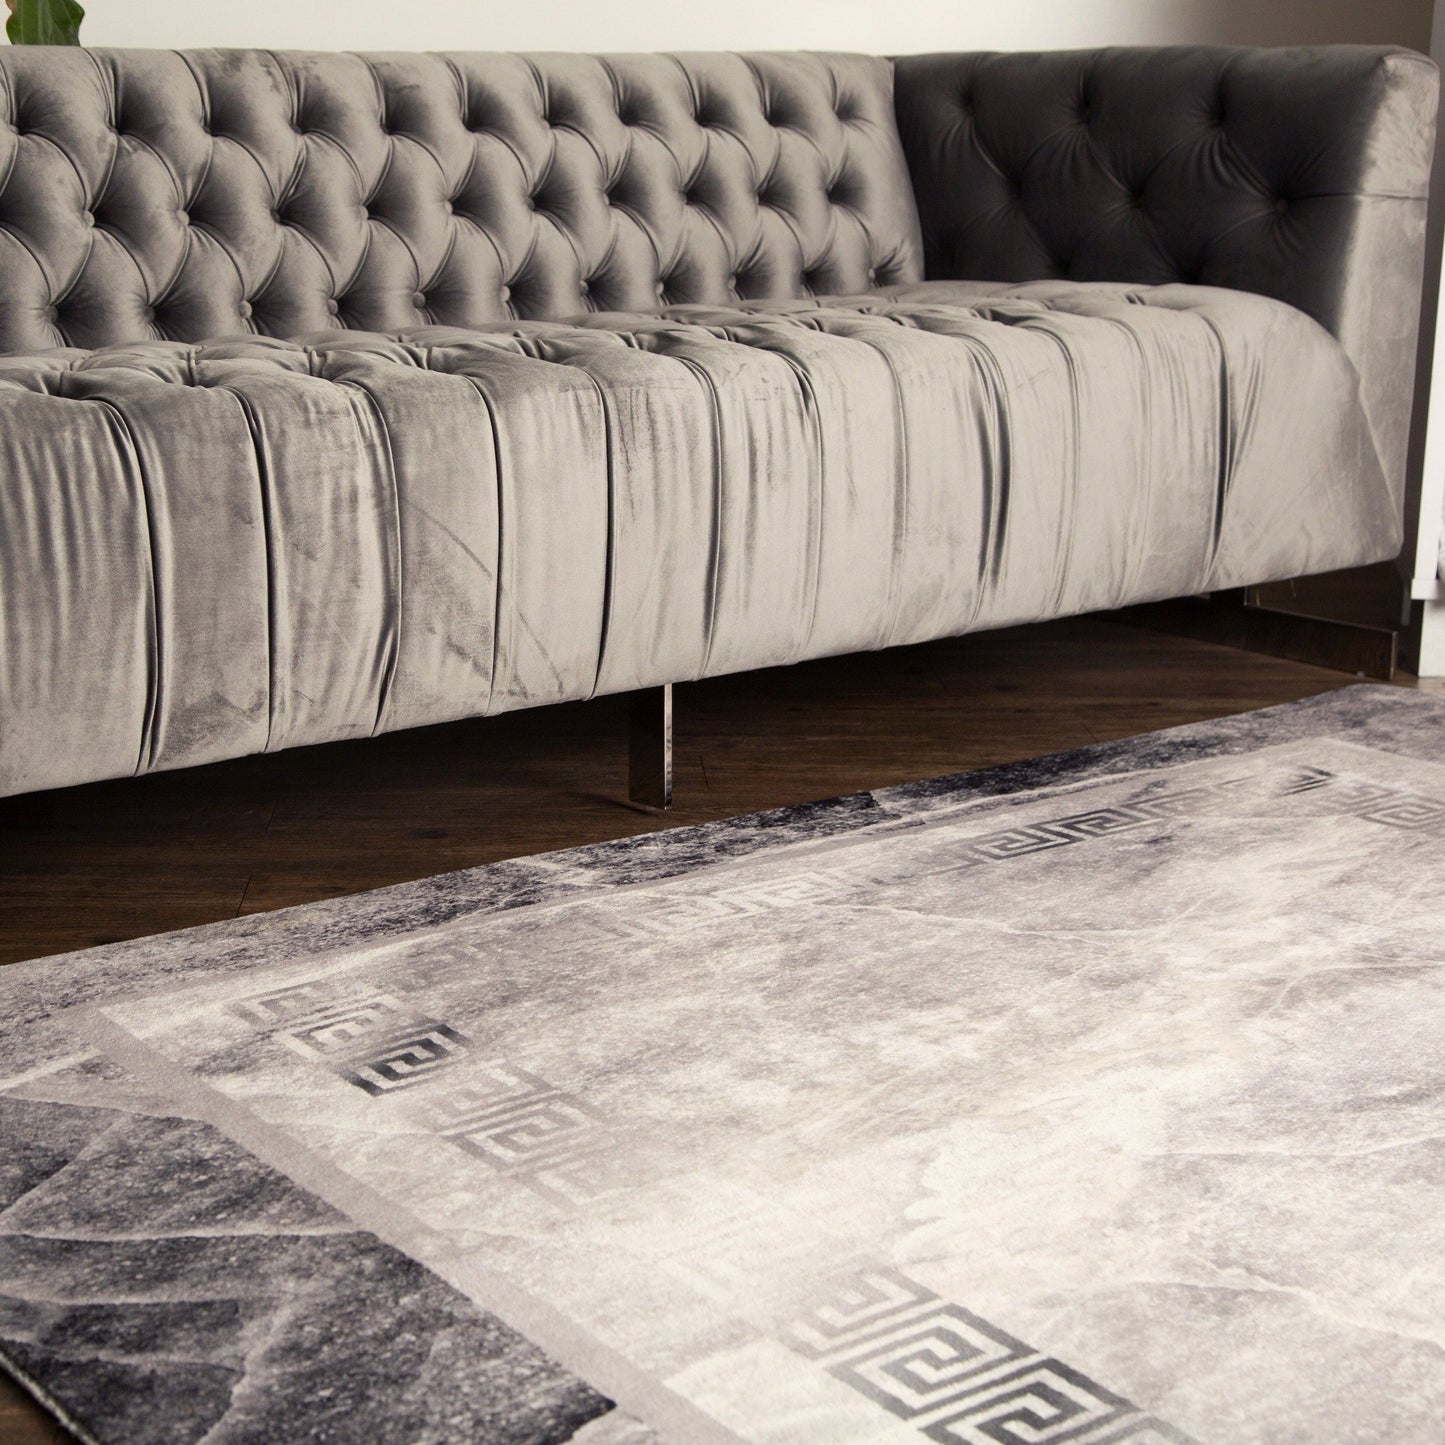 Black Gray and White Soft Plush Fluffy Lattice Design Area Rug/ Carpet